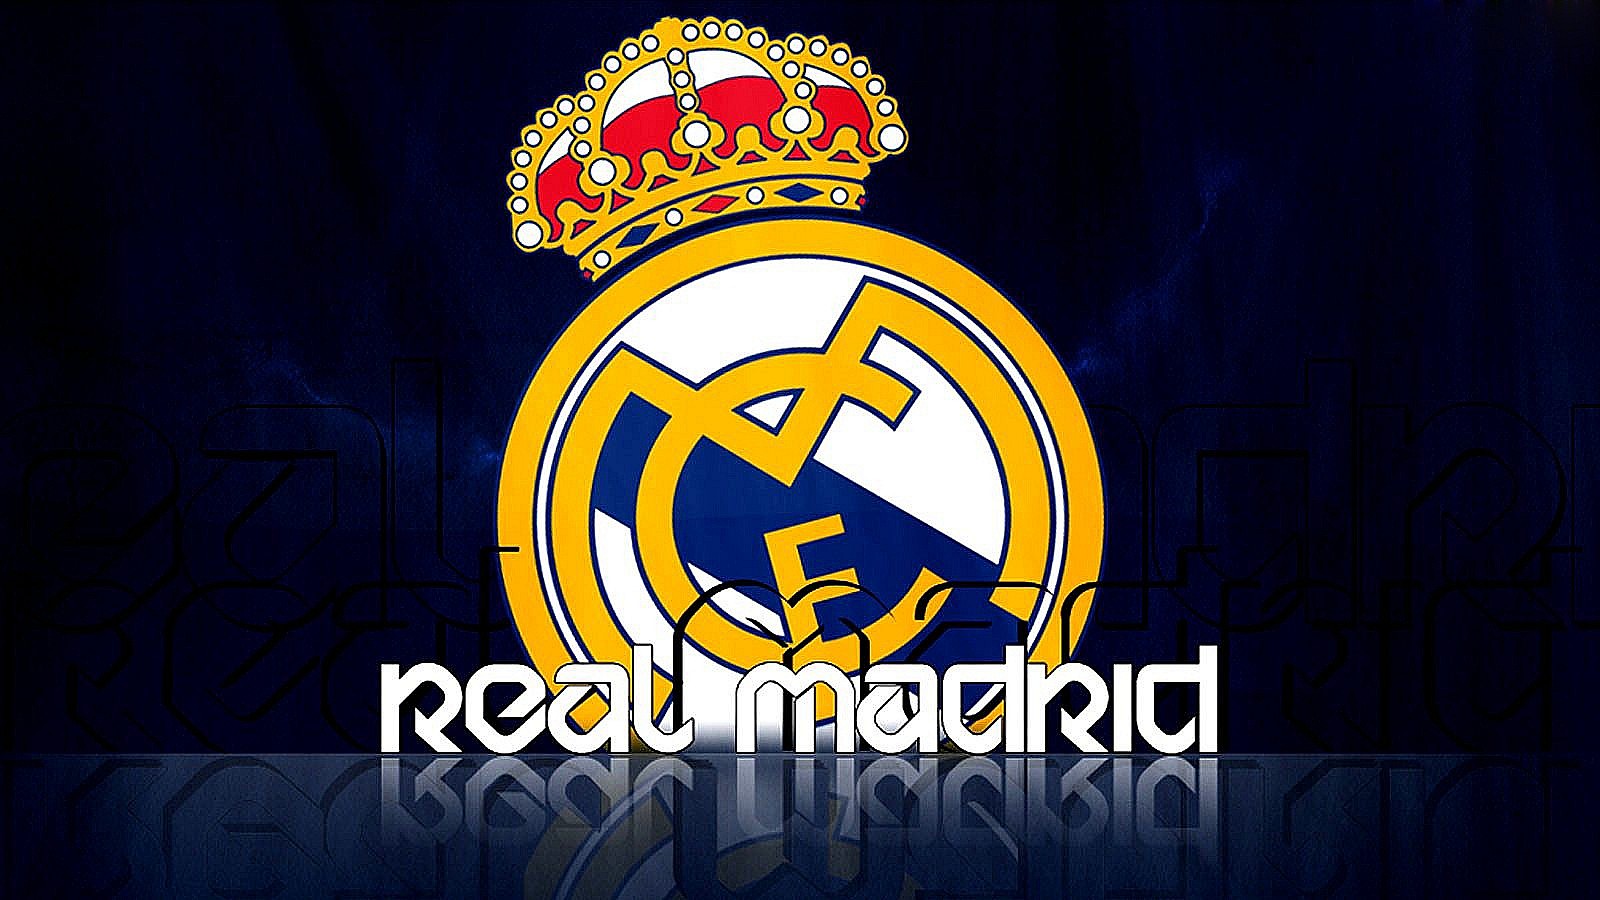 HD Wallpaper Real Madrid Fansite